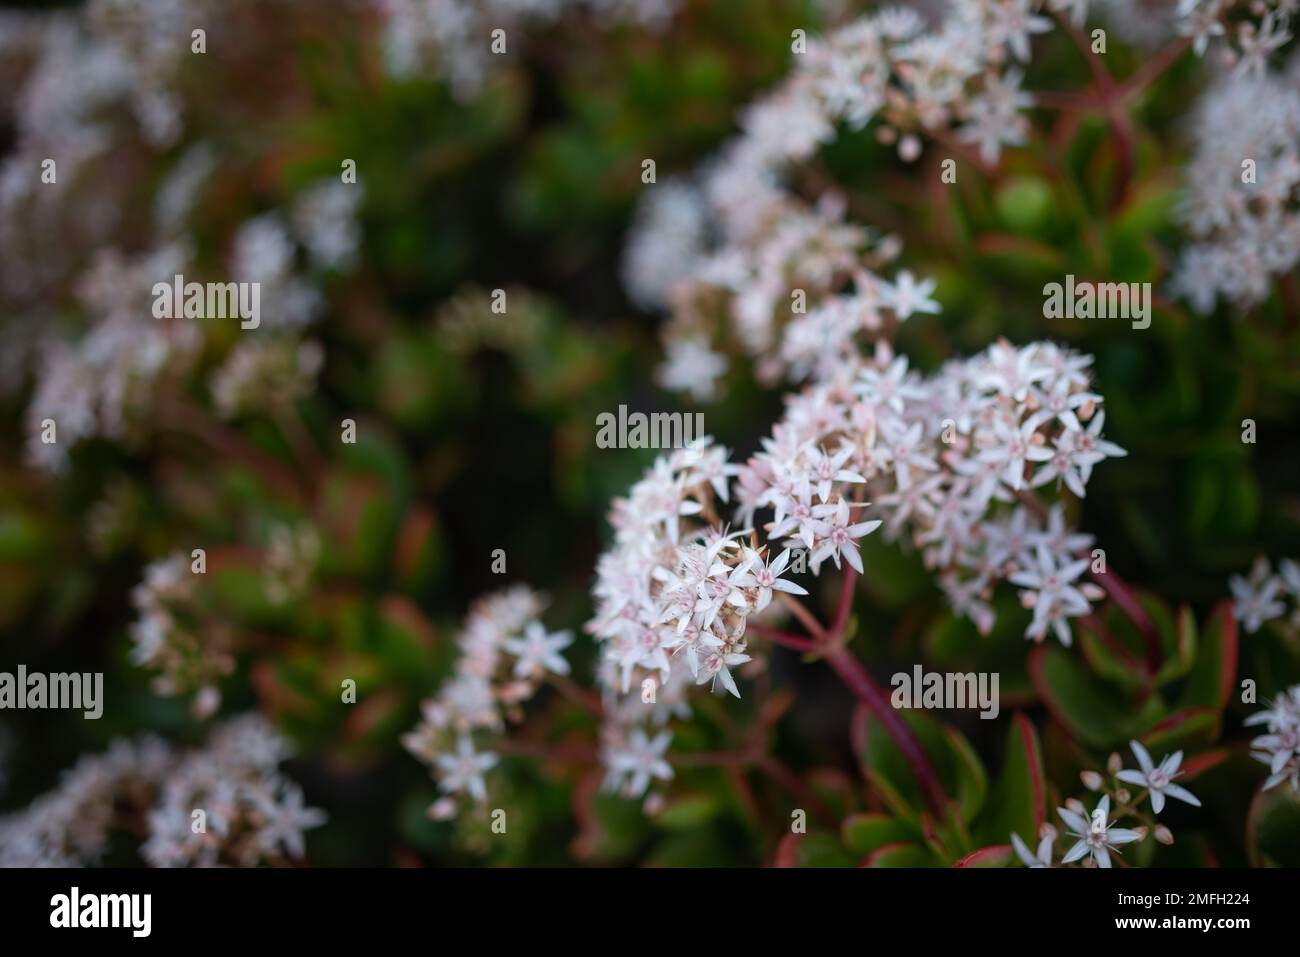 Mostly blurred white flowers of Jade plant or crassula ovata Stock Photo